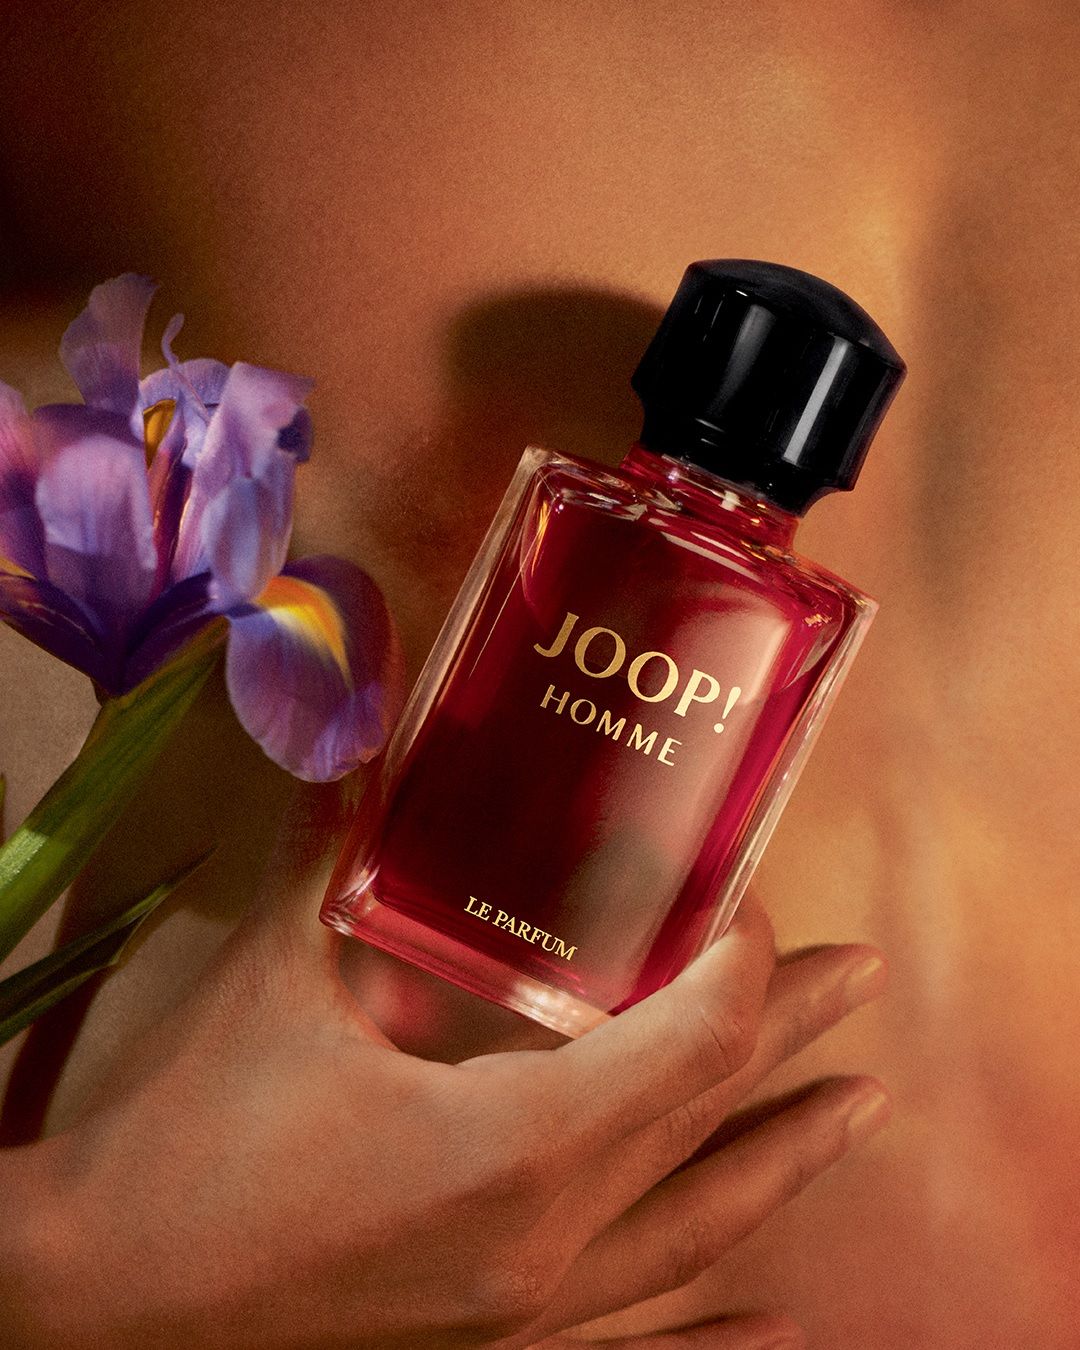 Joop! Homme Le Parfum Joop! cologne - a new fragrance for men 2022